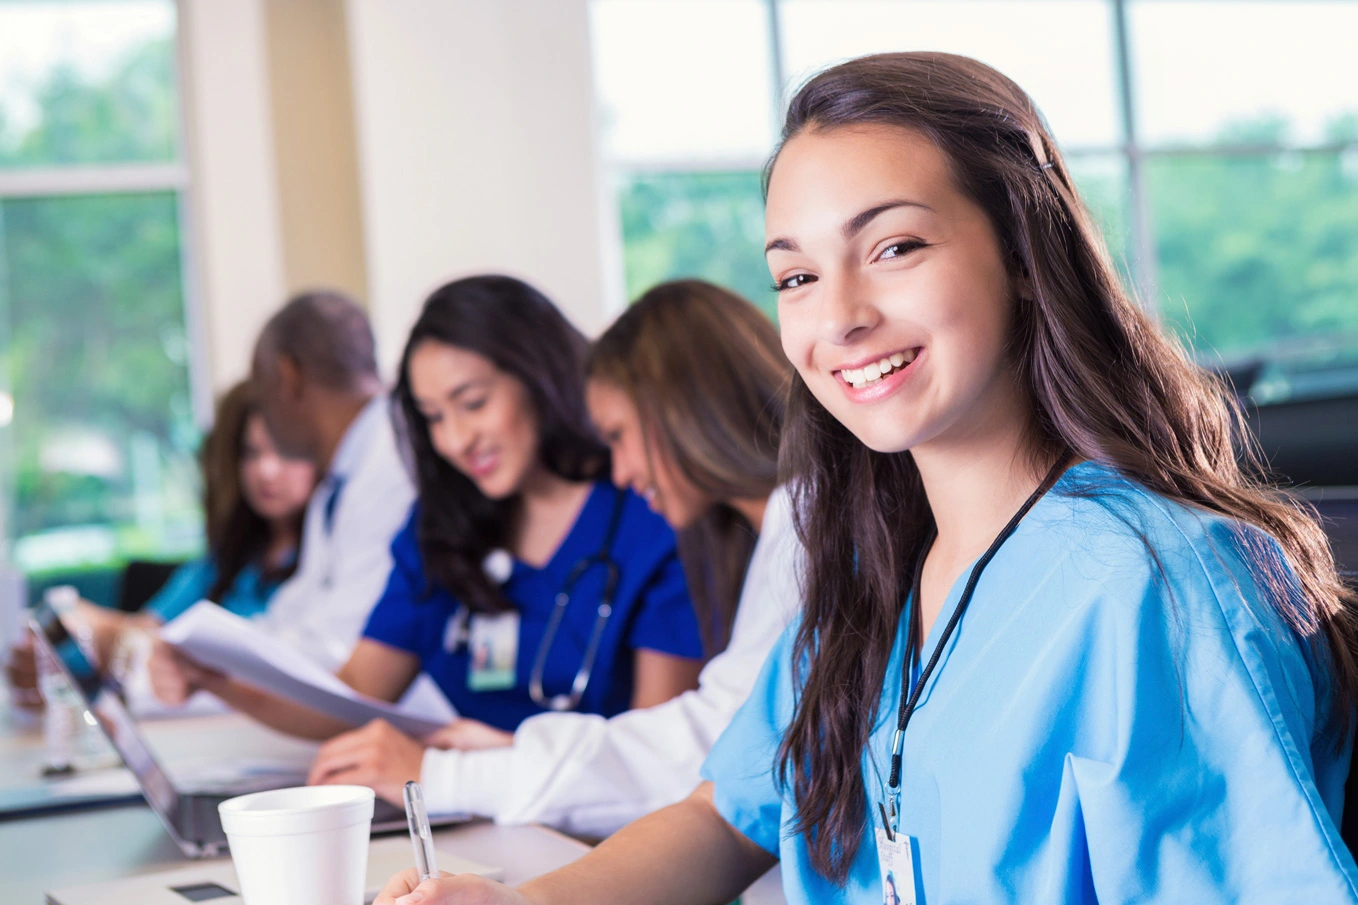 Is Nursing School Harder Than Regular College?